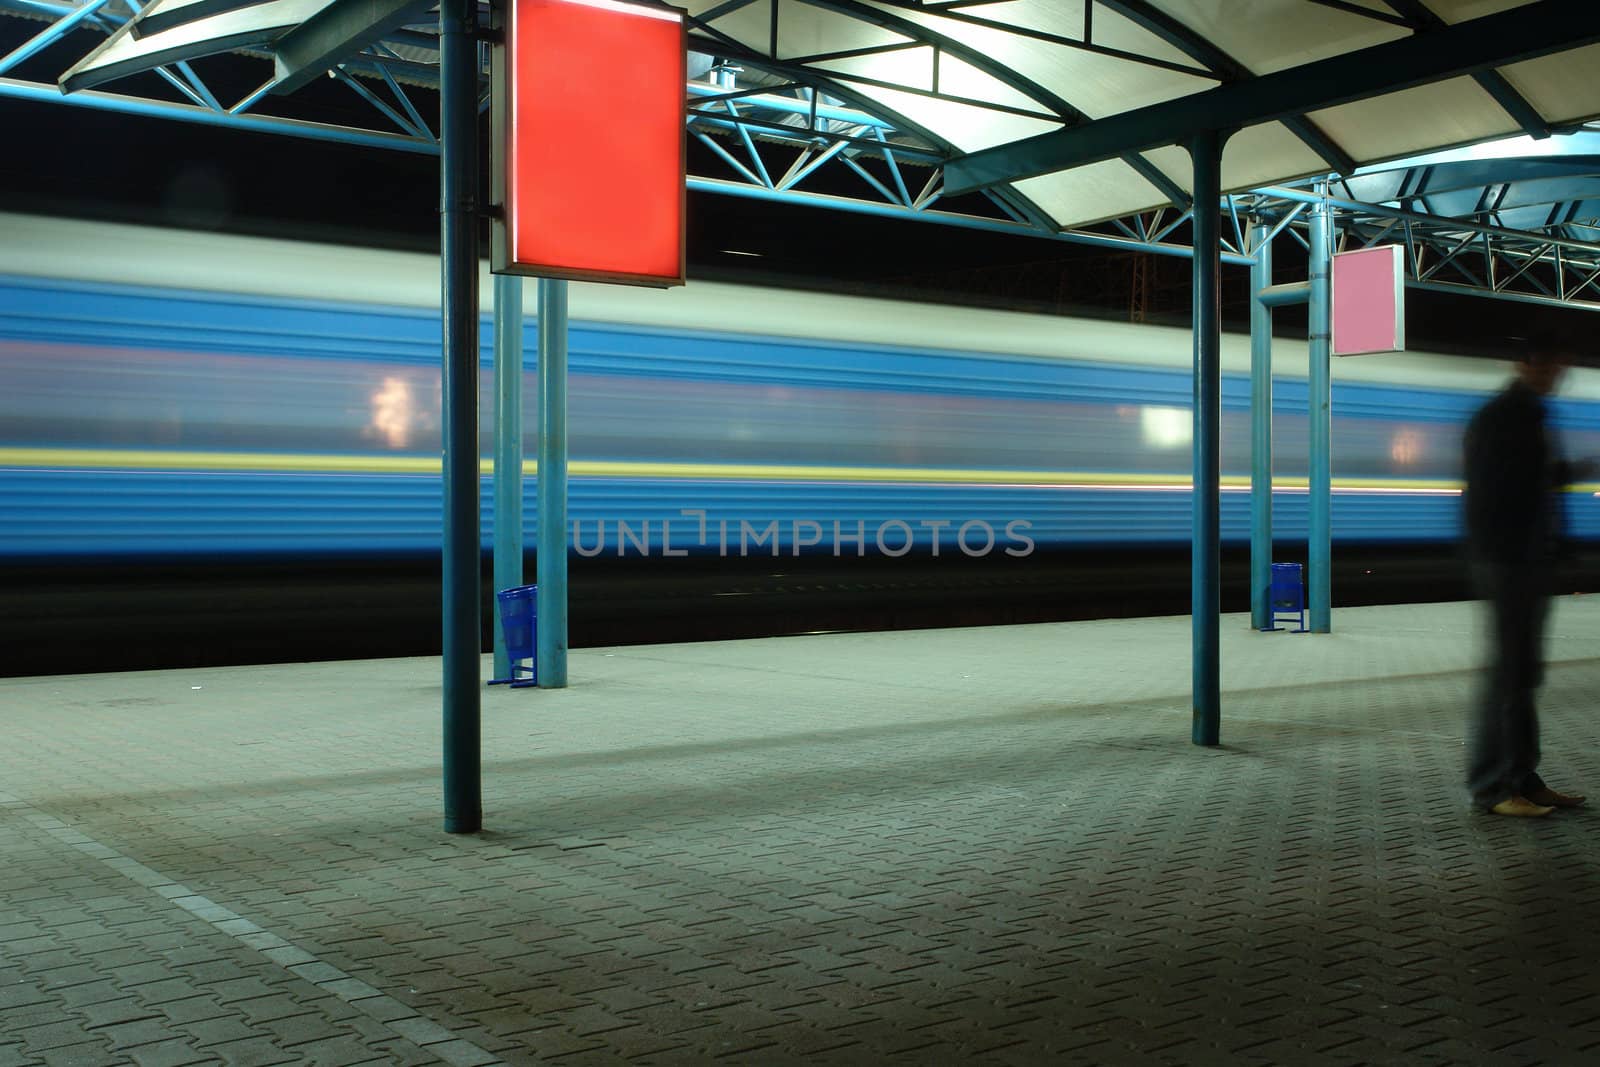 Fast train, railway station Zaporozhye – I, Ukraine